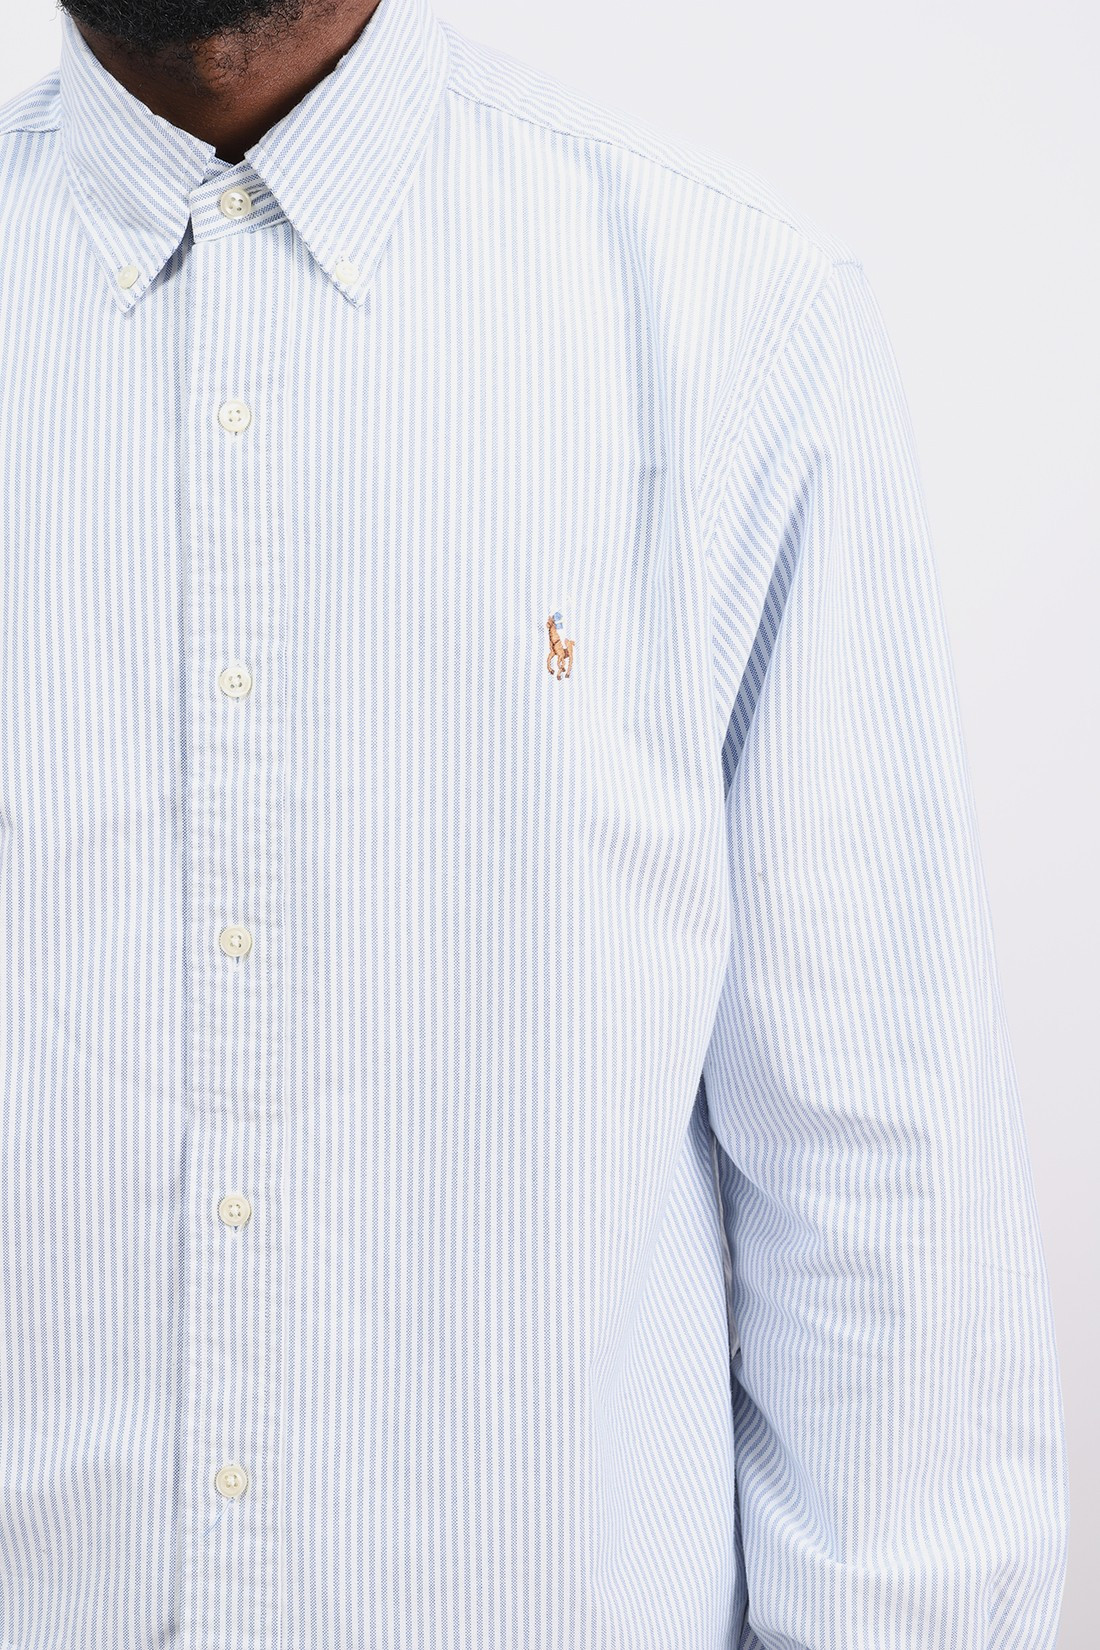 POLO RALPH LAUREN / Custom fit oxford shirt Stripe blue